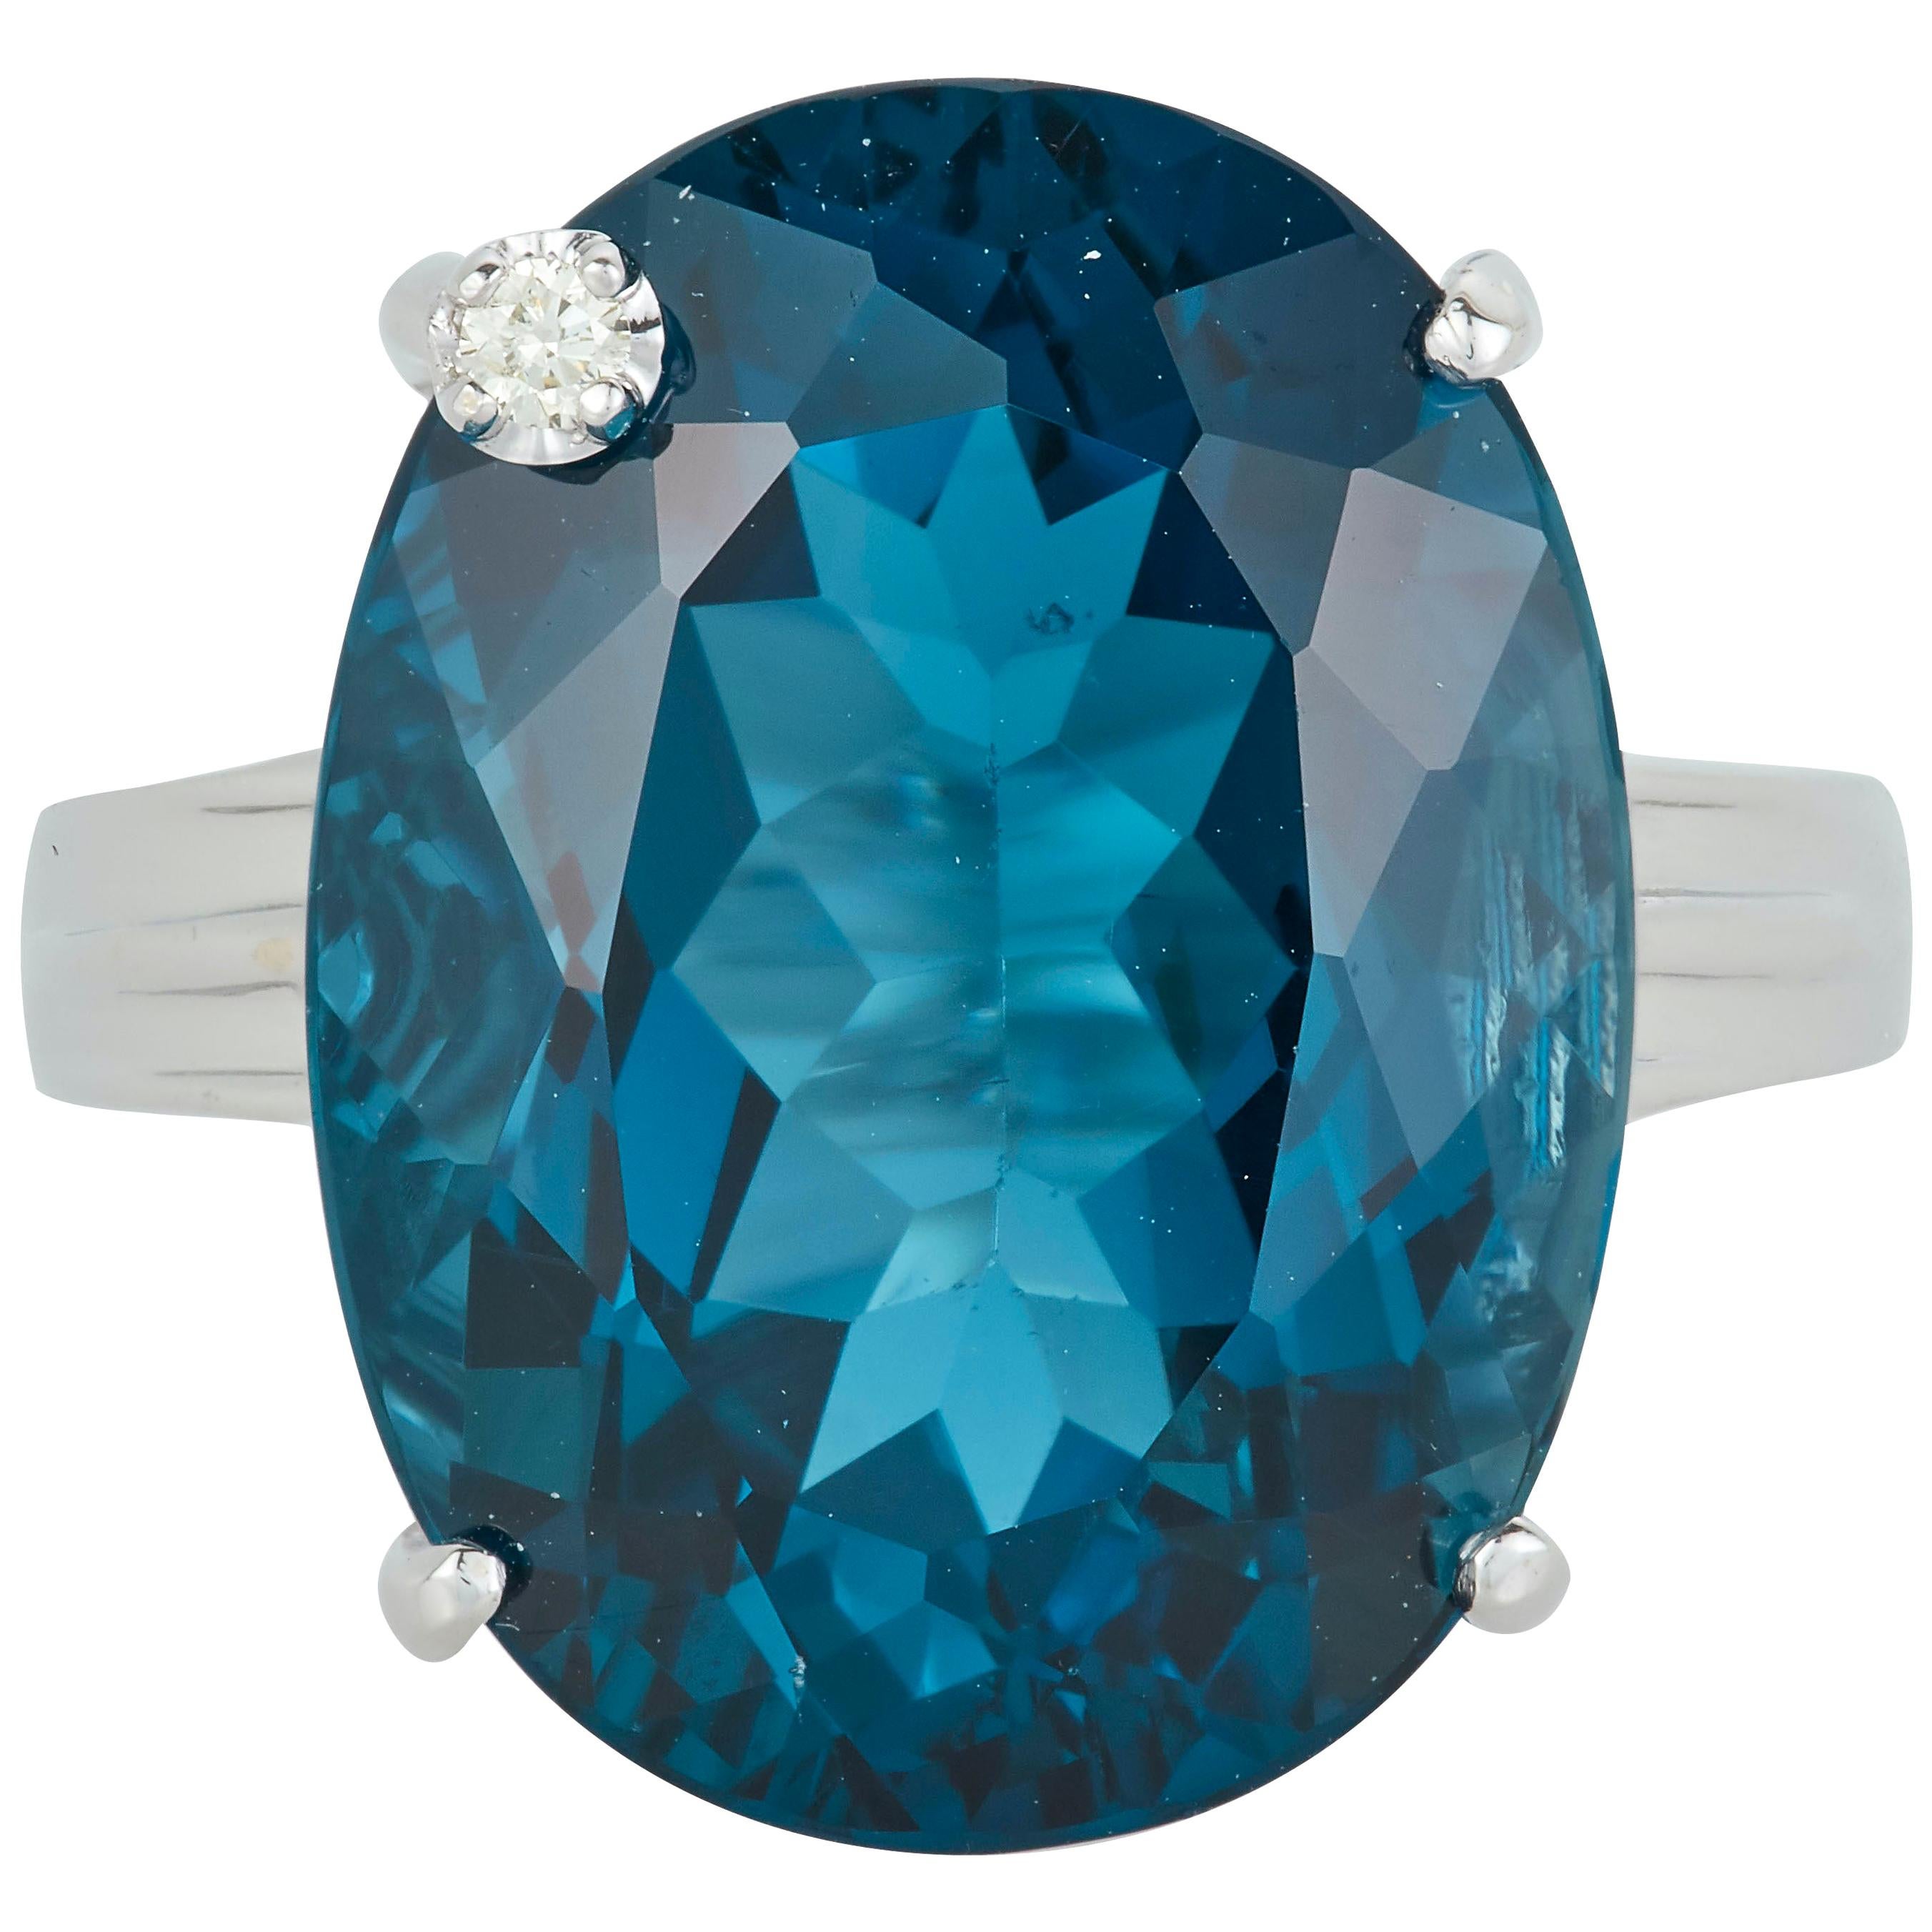 25.06 Carat Oval Blue Topaz Diamond Statement Solitaire Fashion Ring 14K Gold